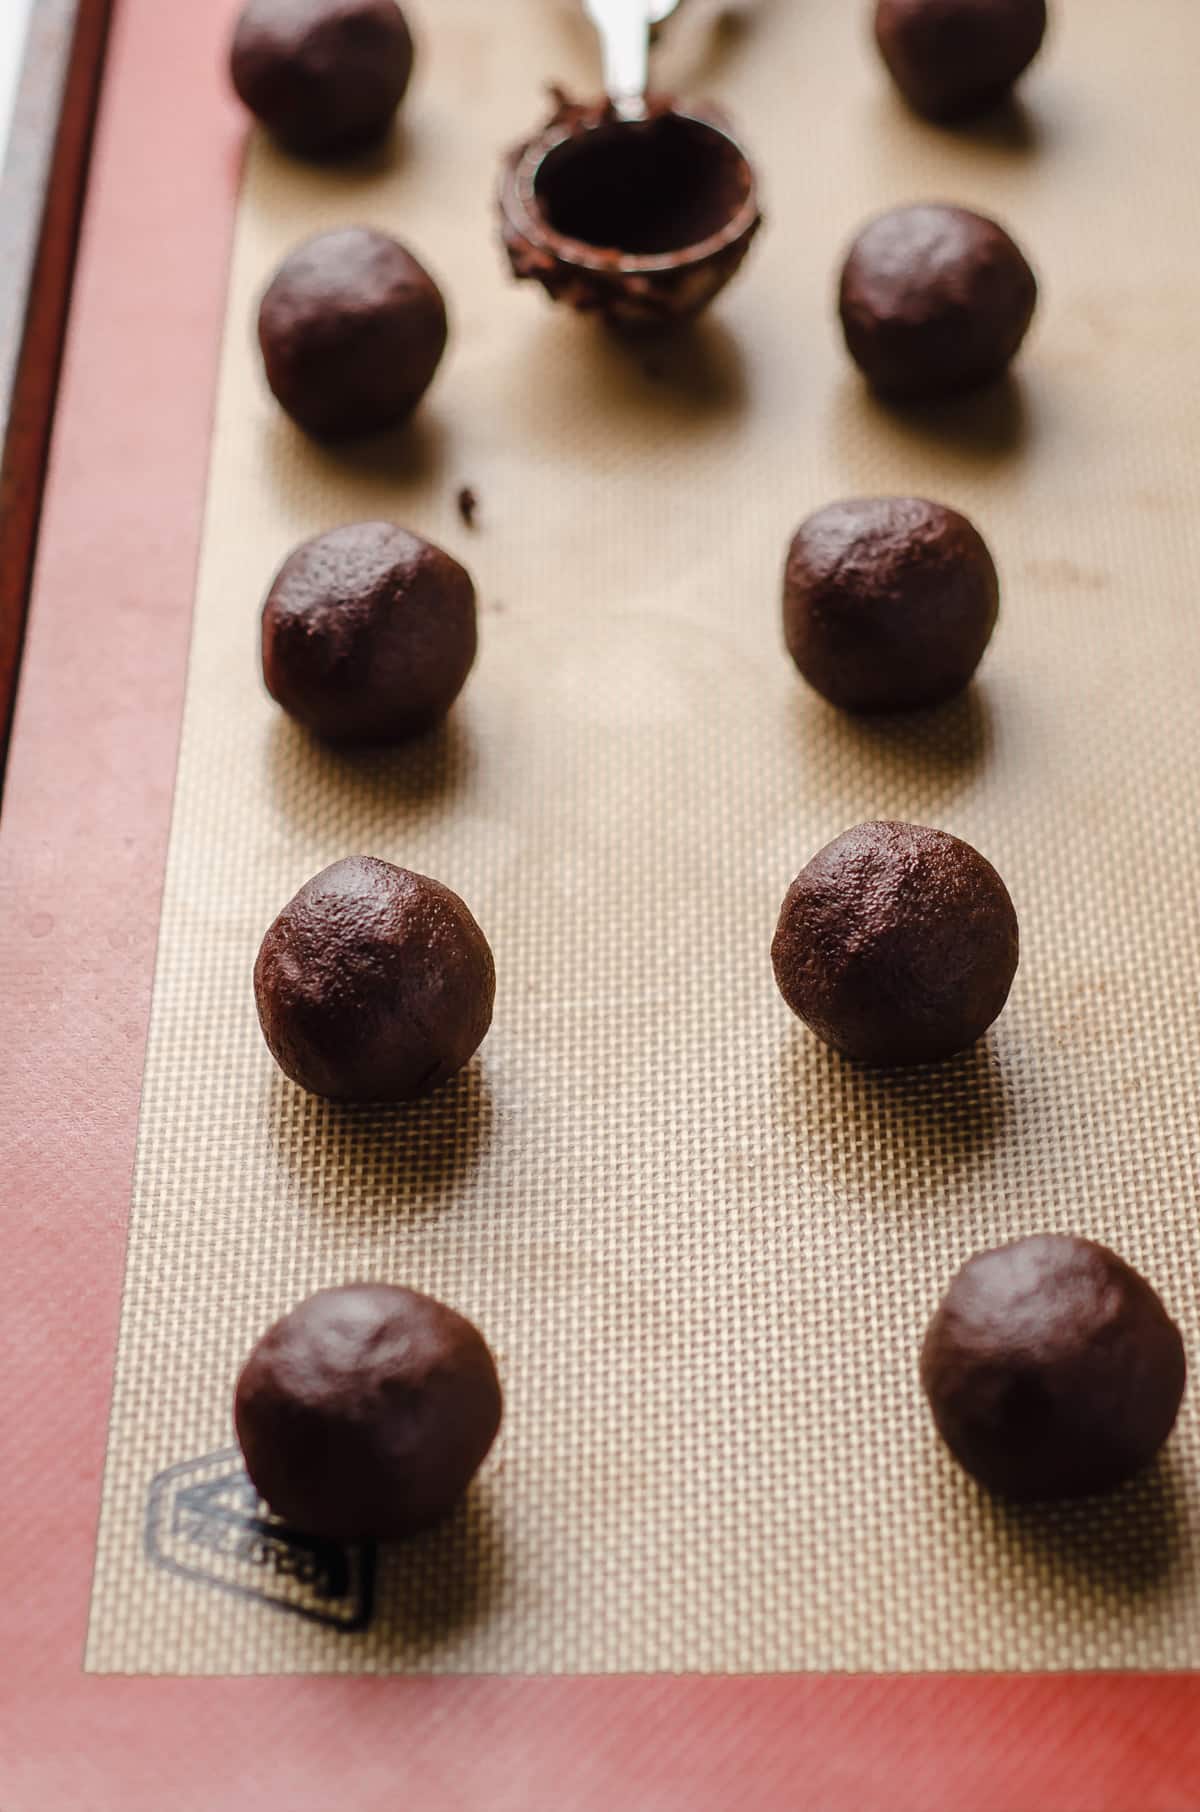 chocolate cookie dough balls on a baking sheet